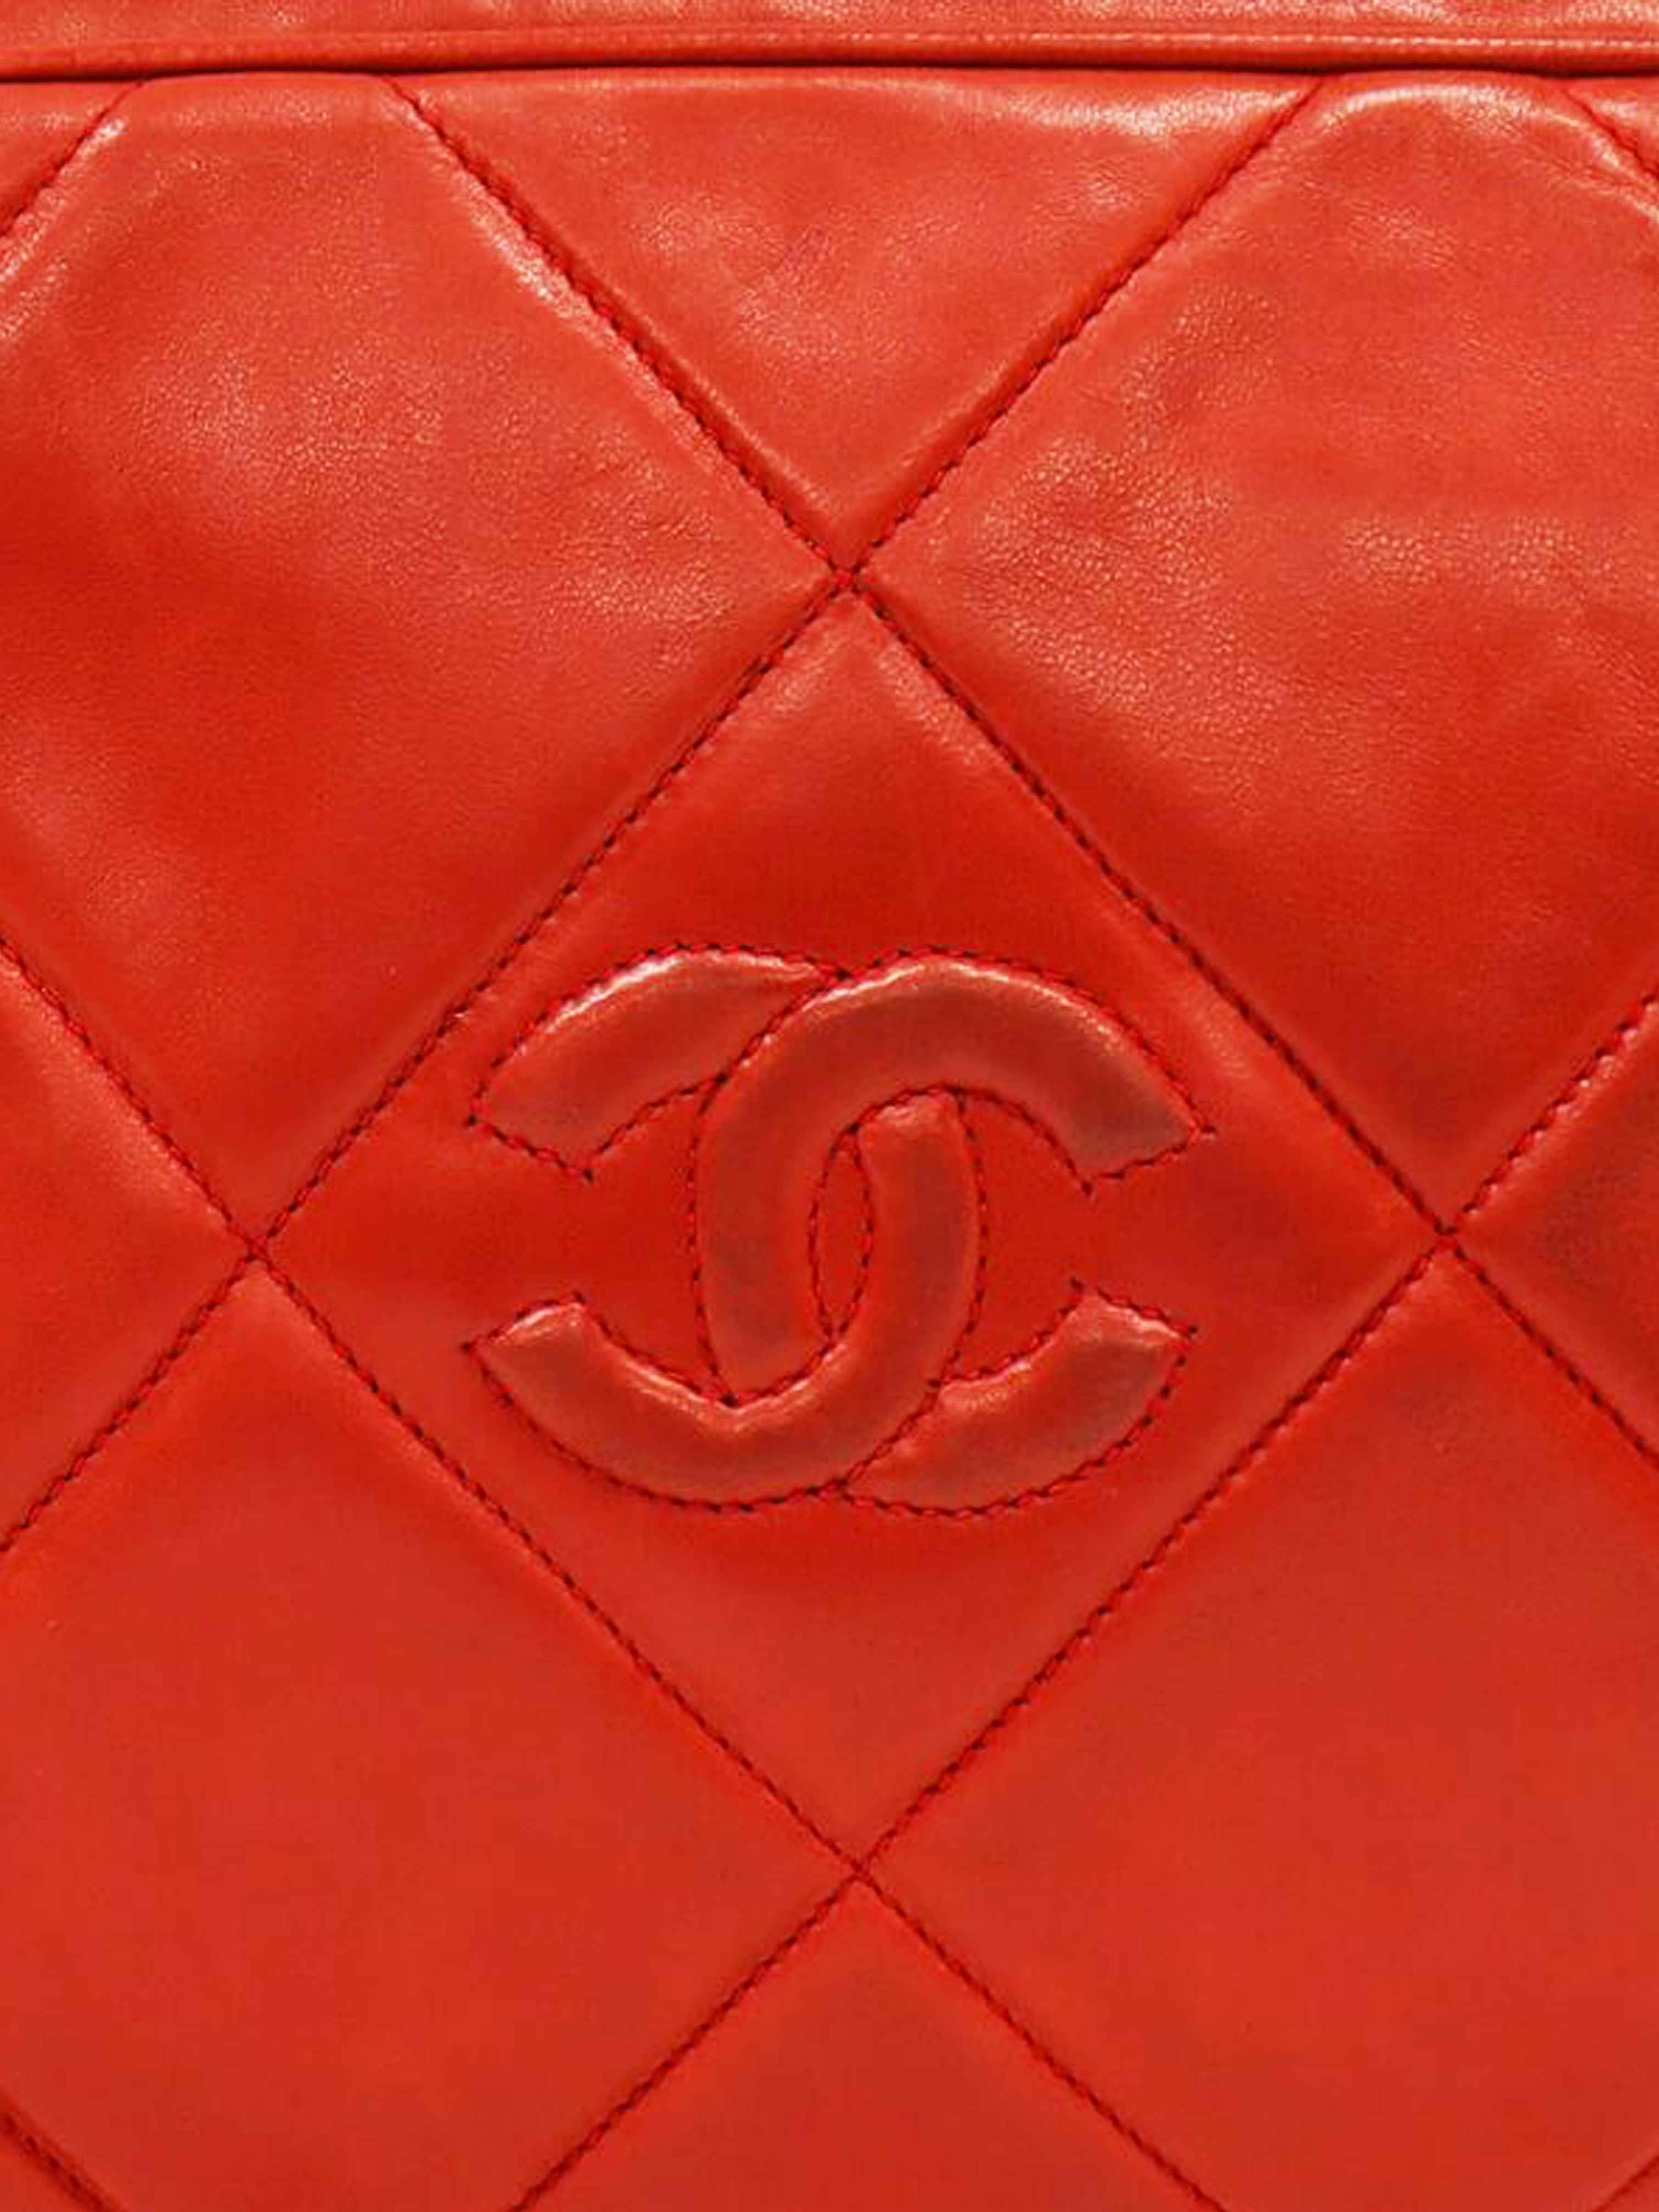 Chanel 1995-1996 Matelasse Turn Lock Chain Shoulder Bag · INTO